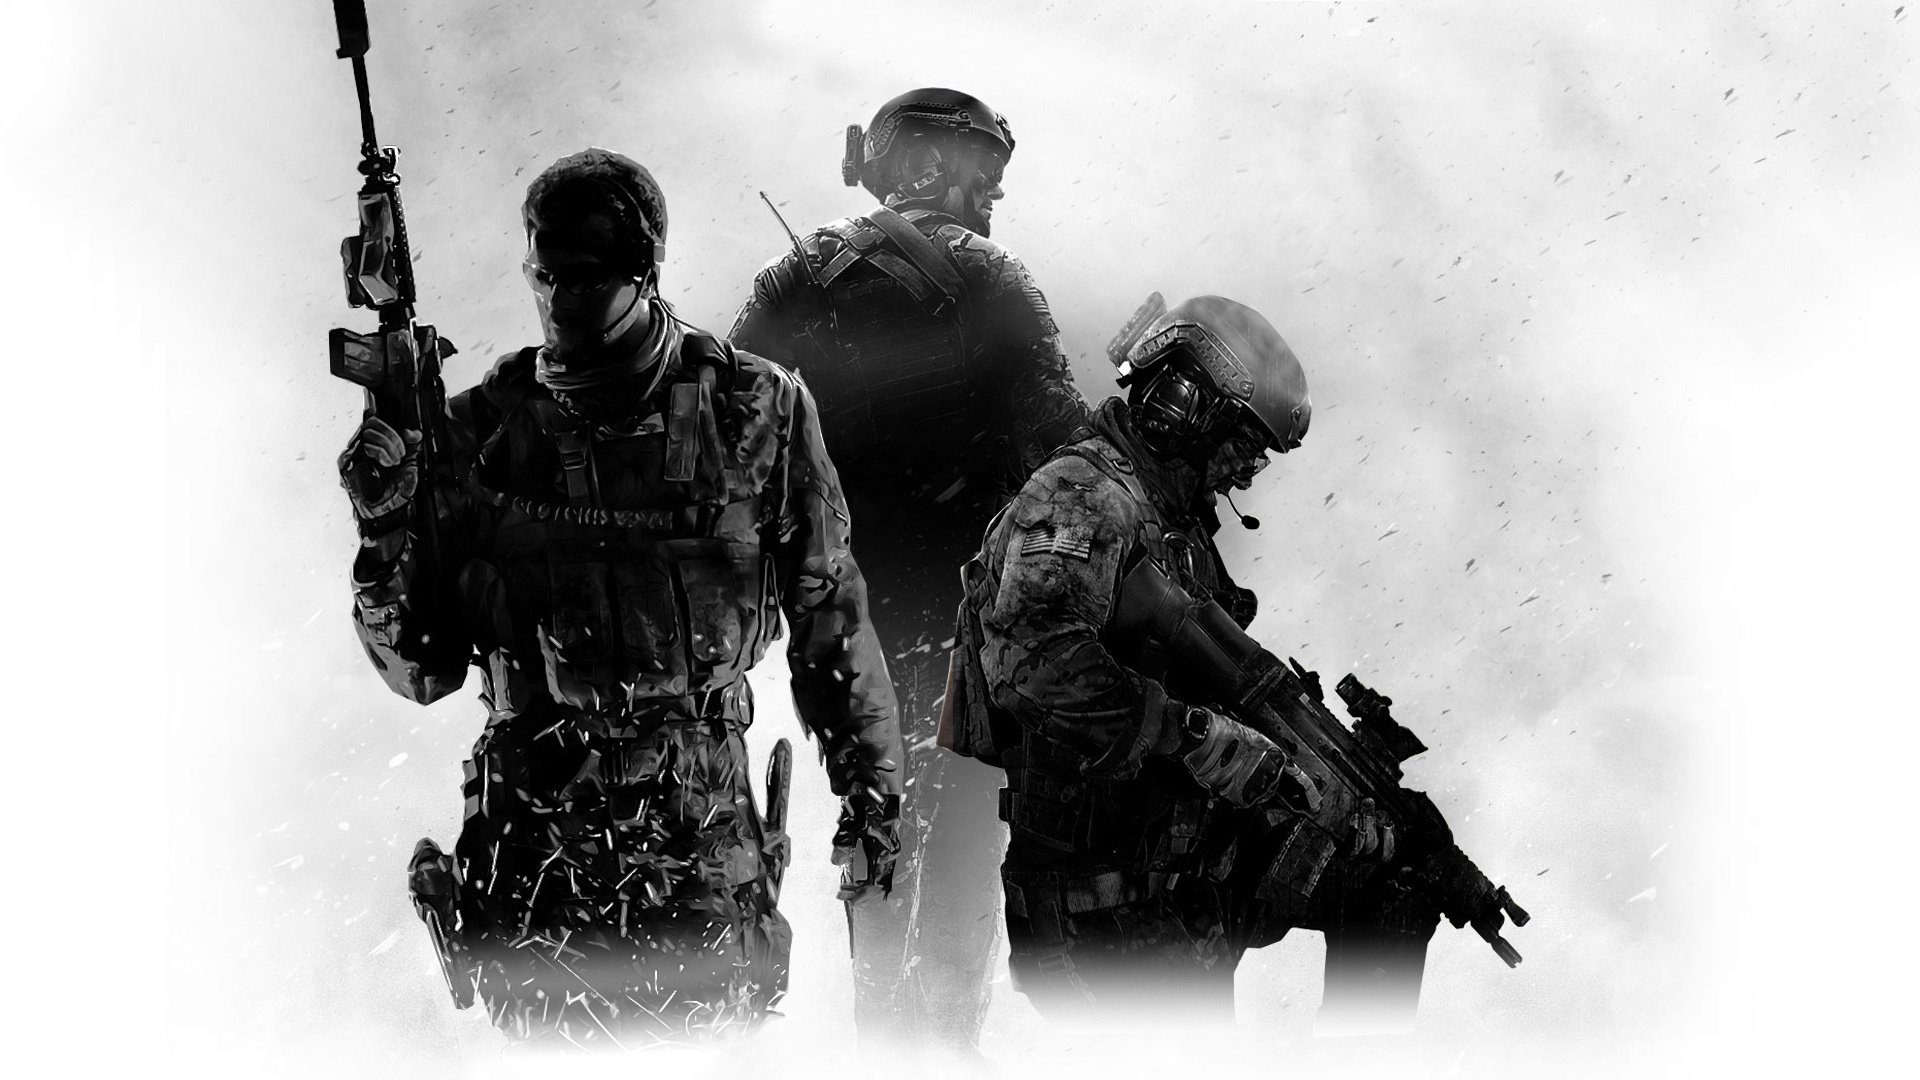 49+] Call of Duty MW3 Wallpapers - WallpaperSafari